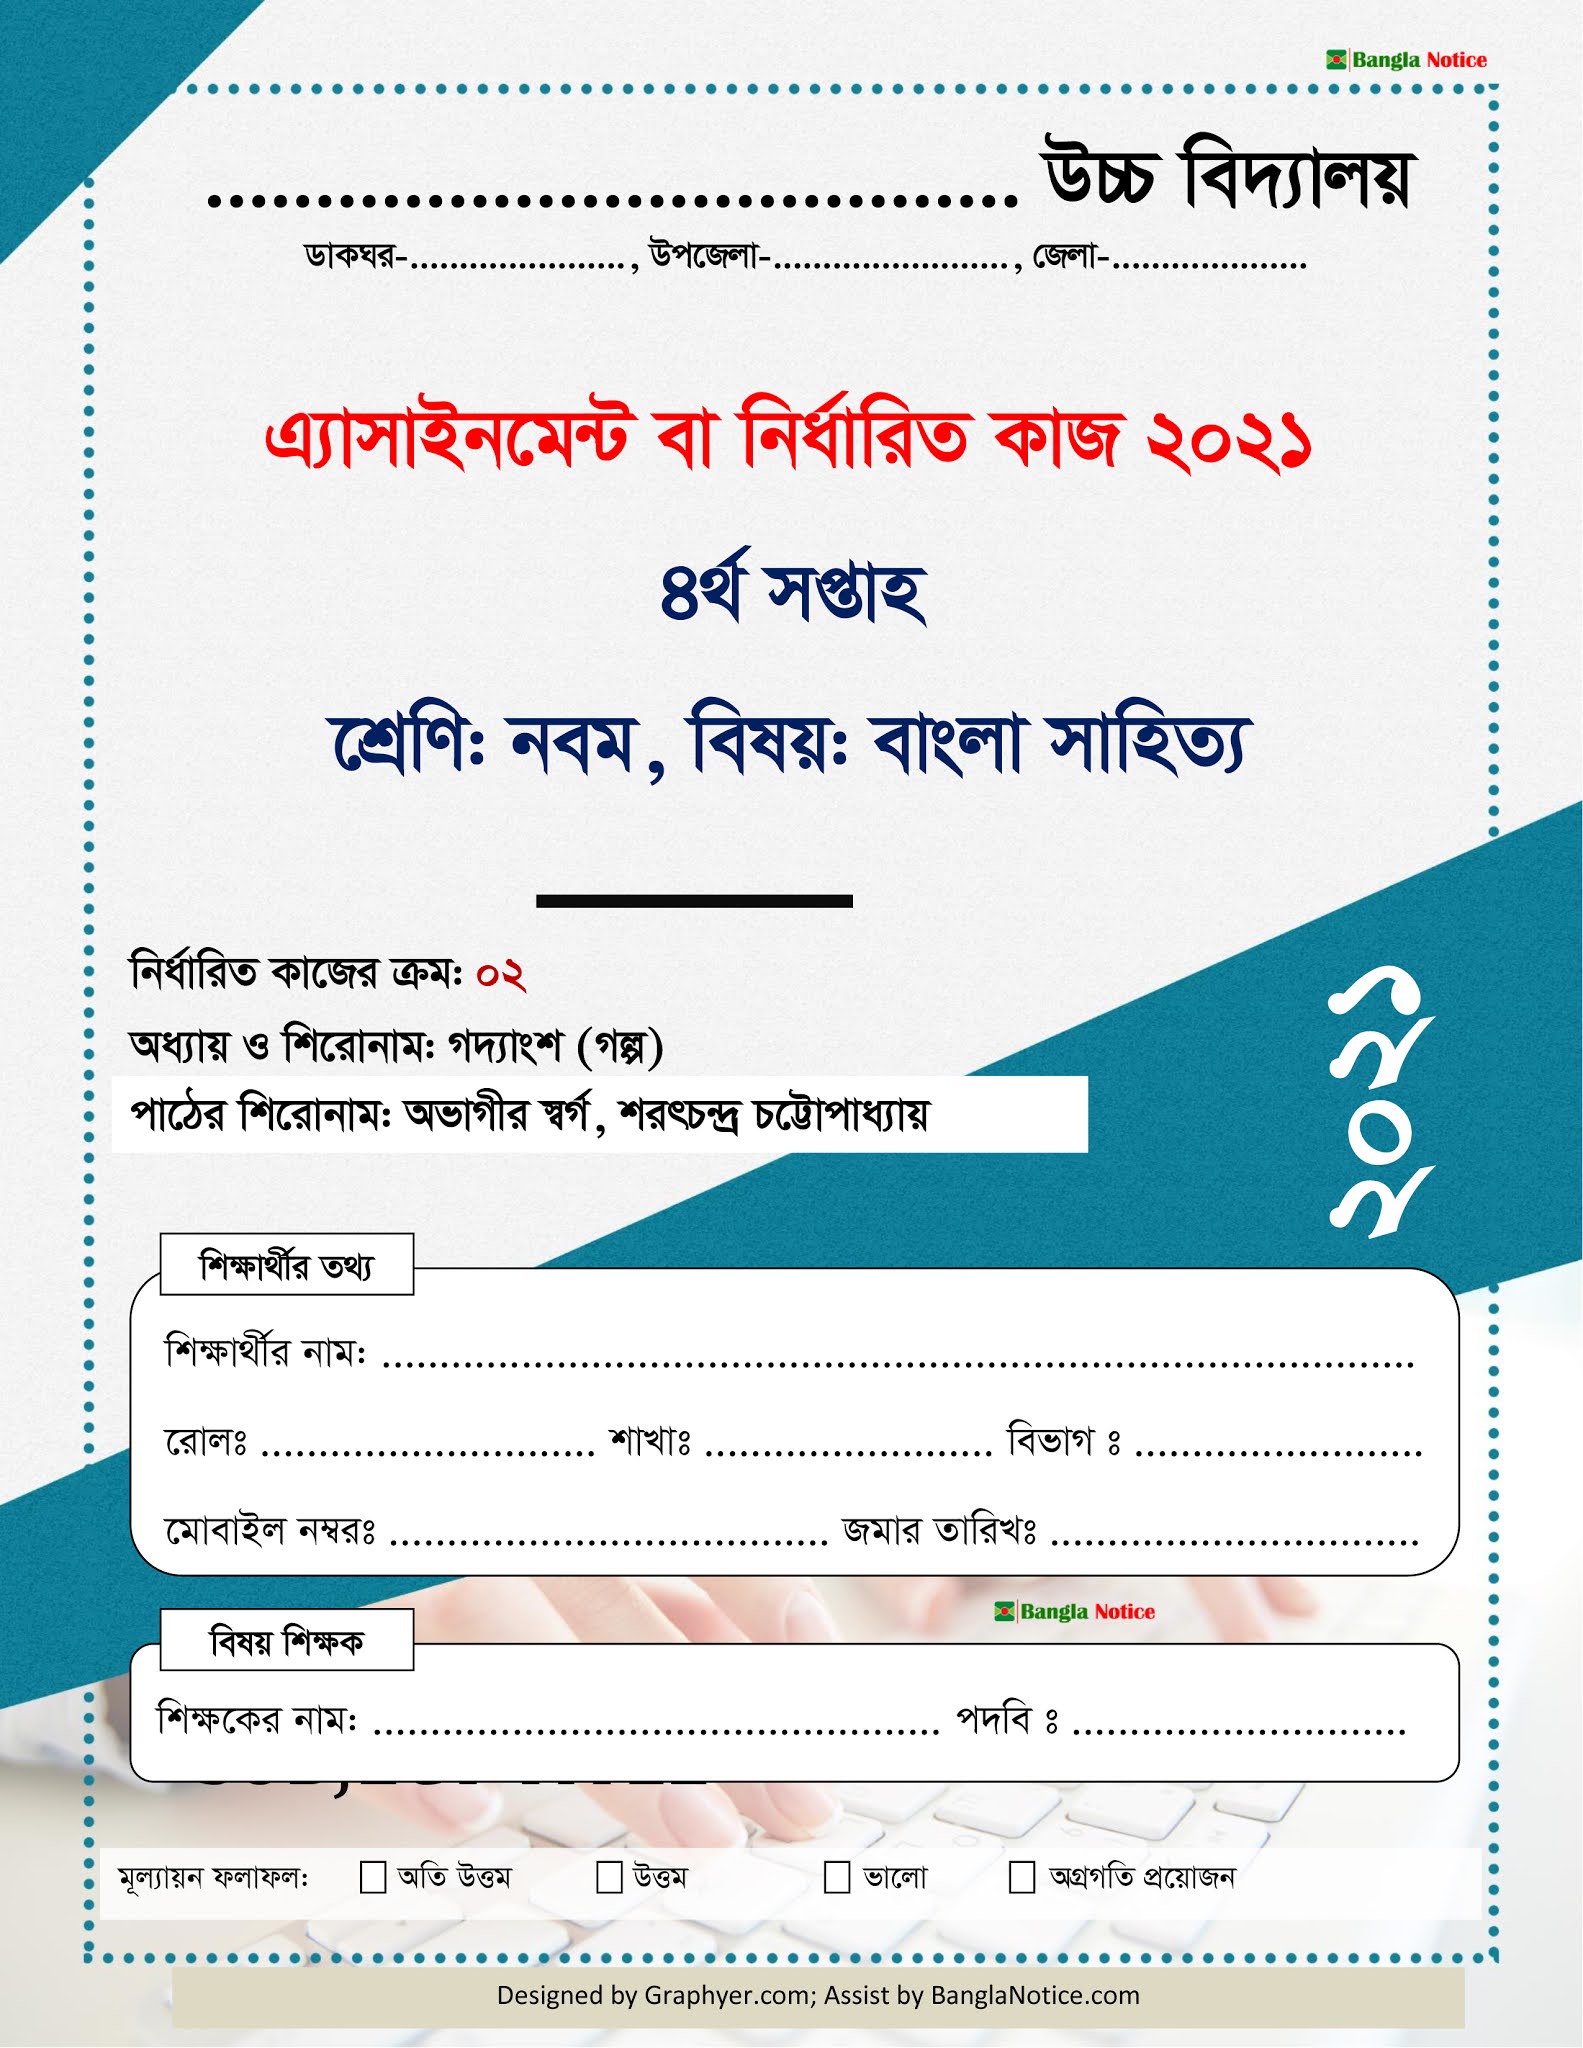 assignment cover page bangla pdf